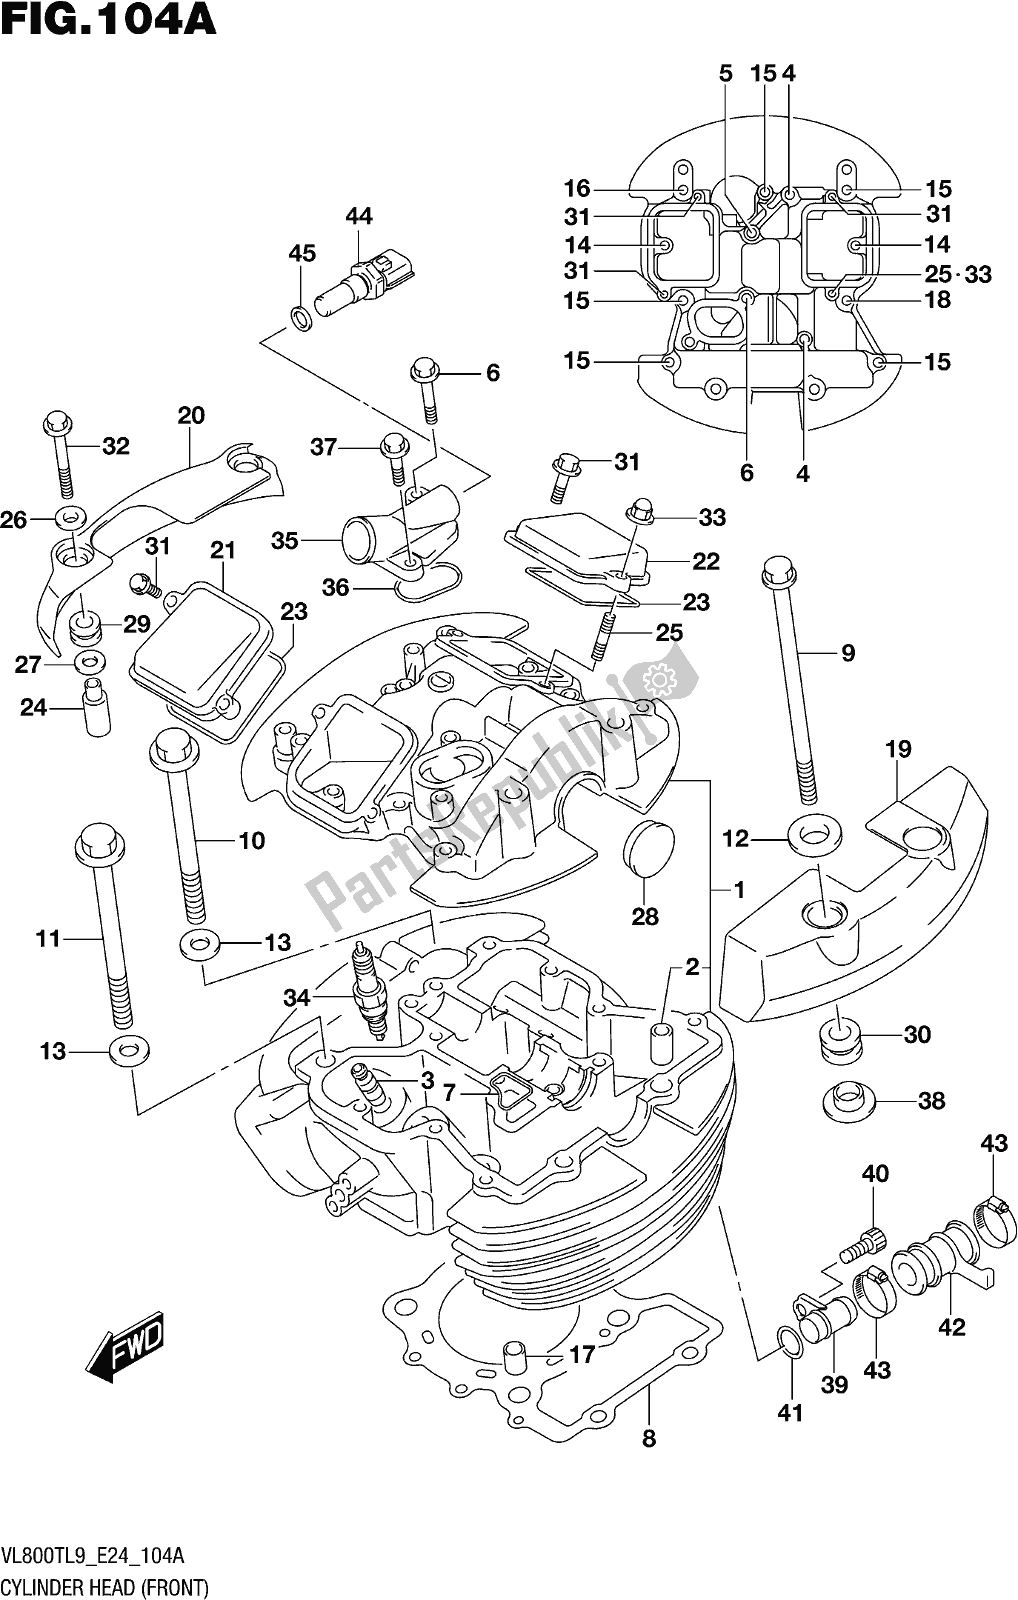 Todas as partes de Fig. 104a Cylinder Head (front) do Suzuki VL 800T 2019